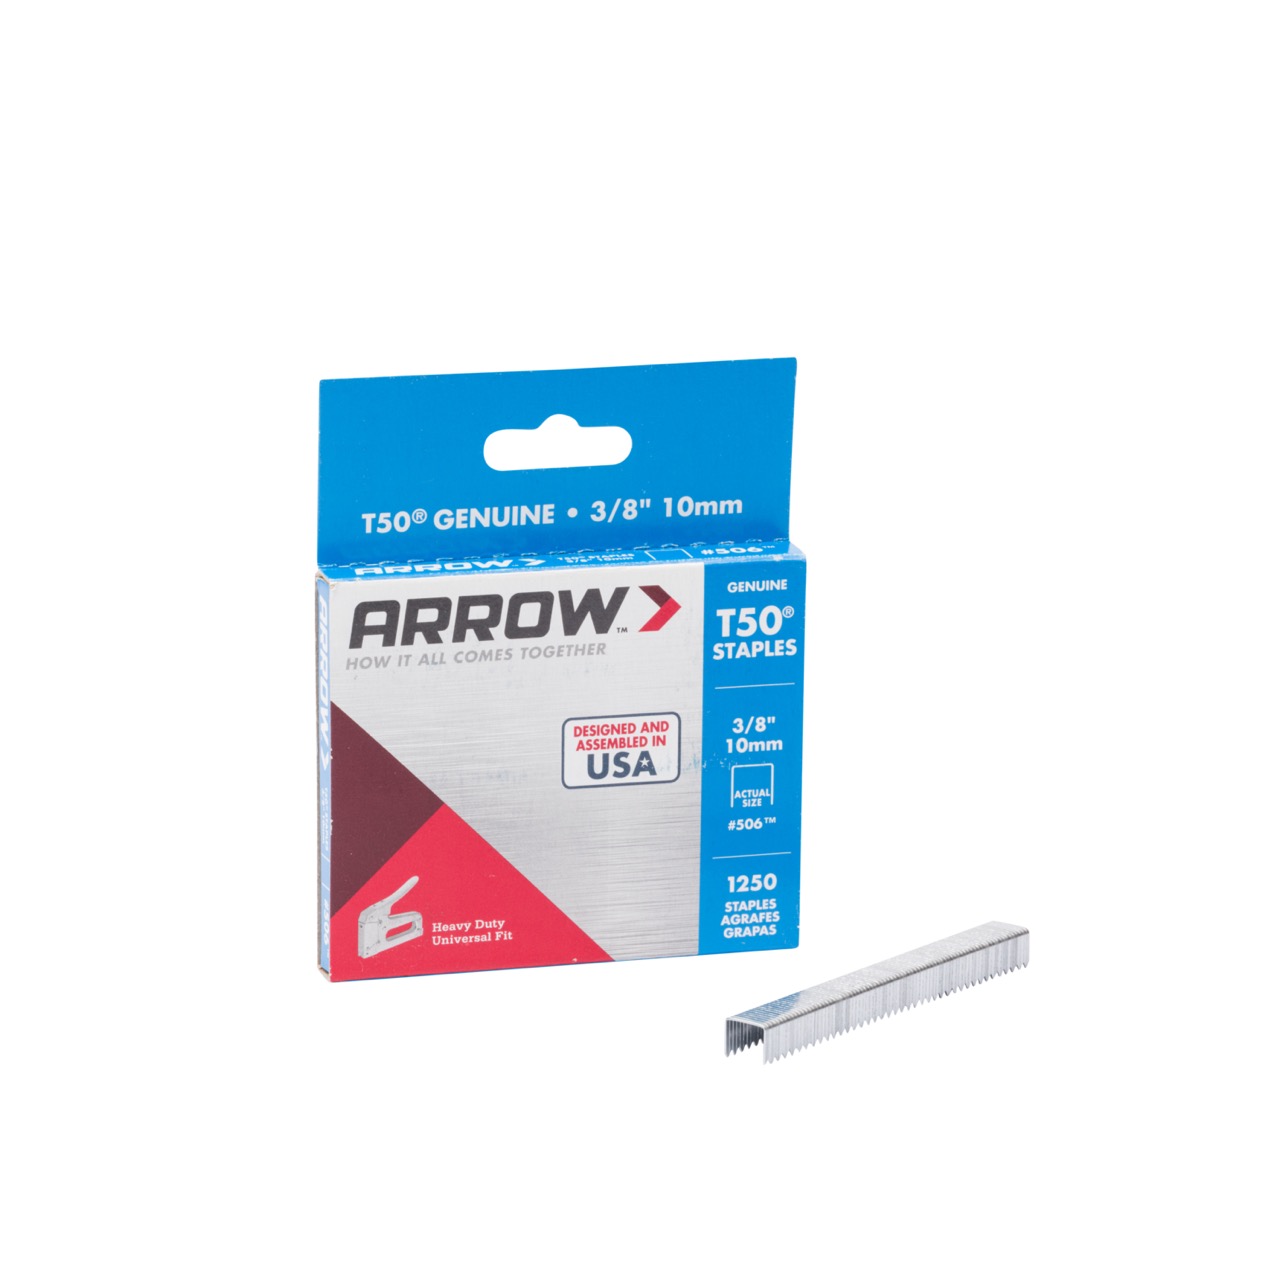 Arrow Fastener® 50624 - T50™ 3/8 Steel Staples 